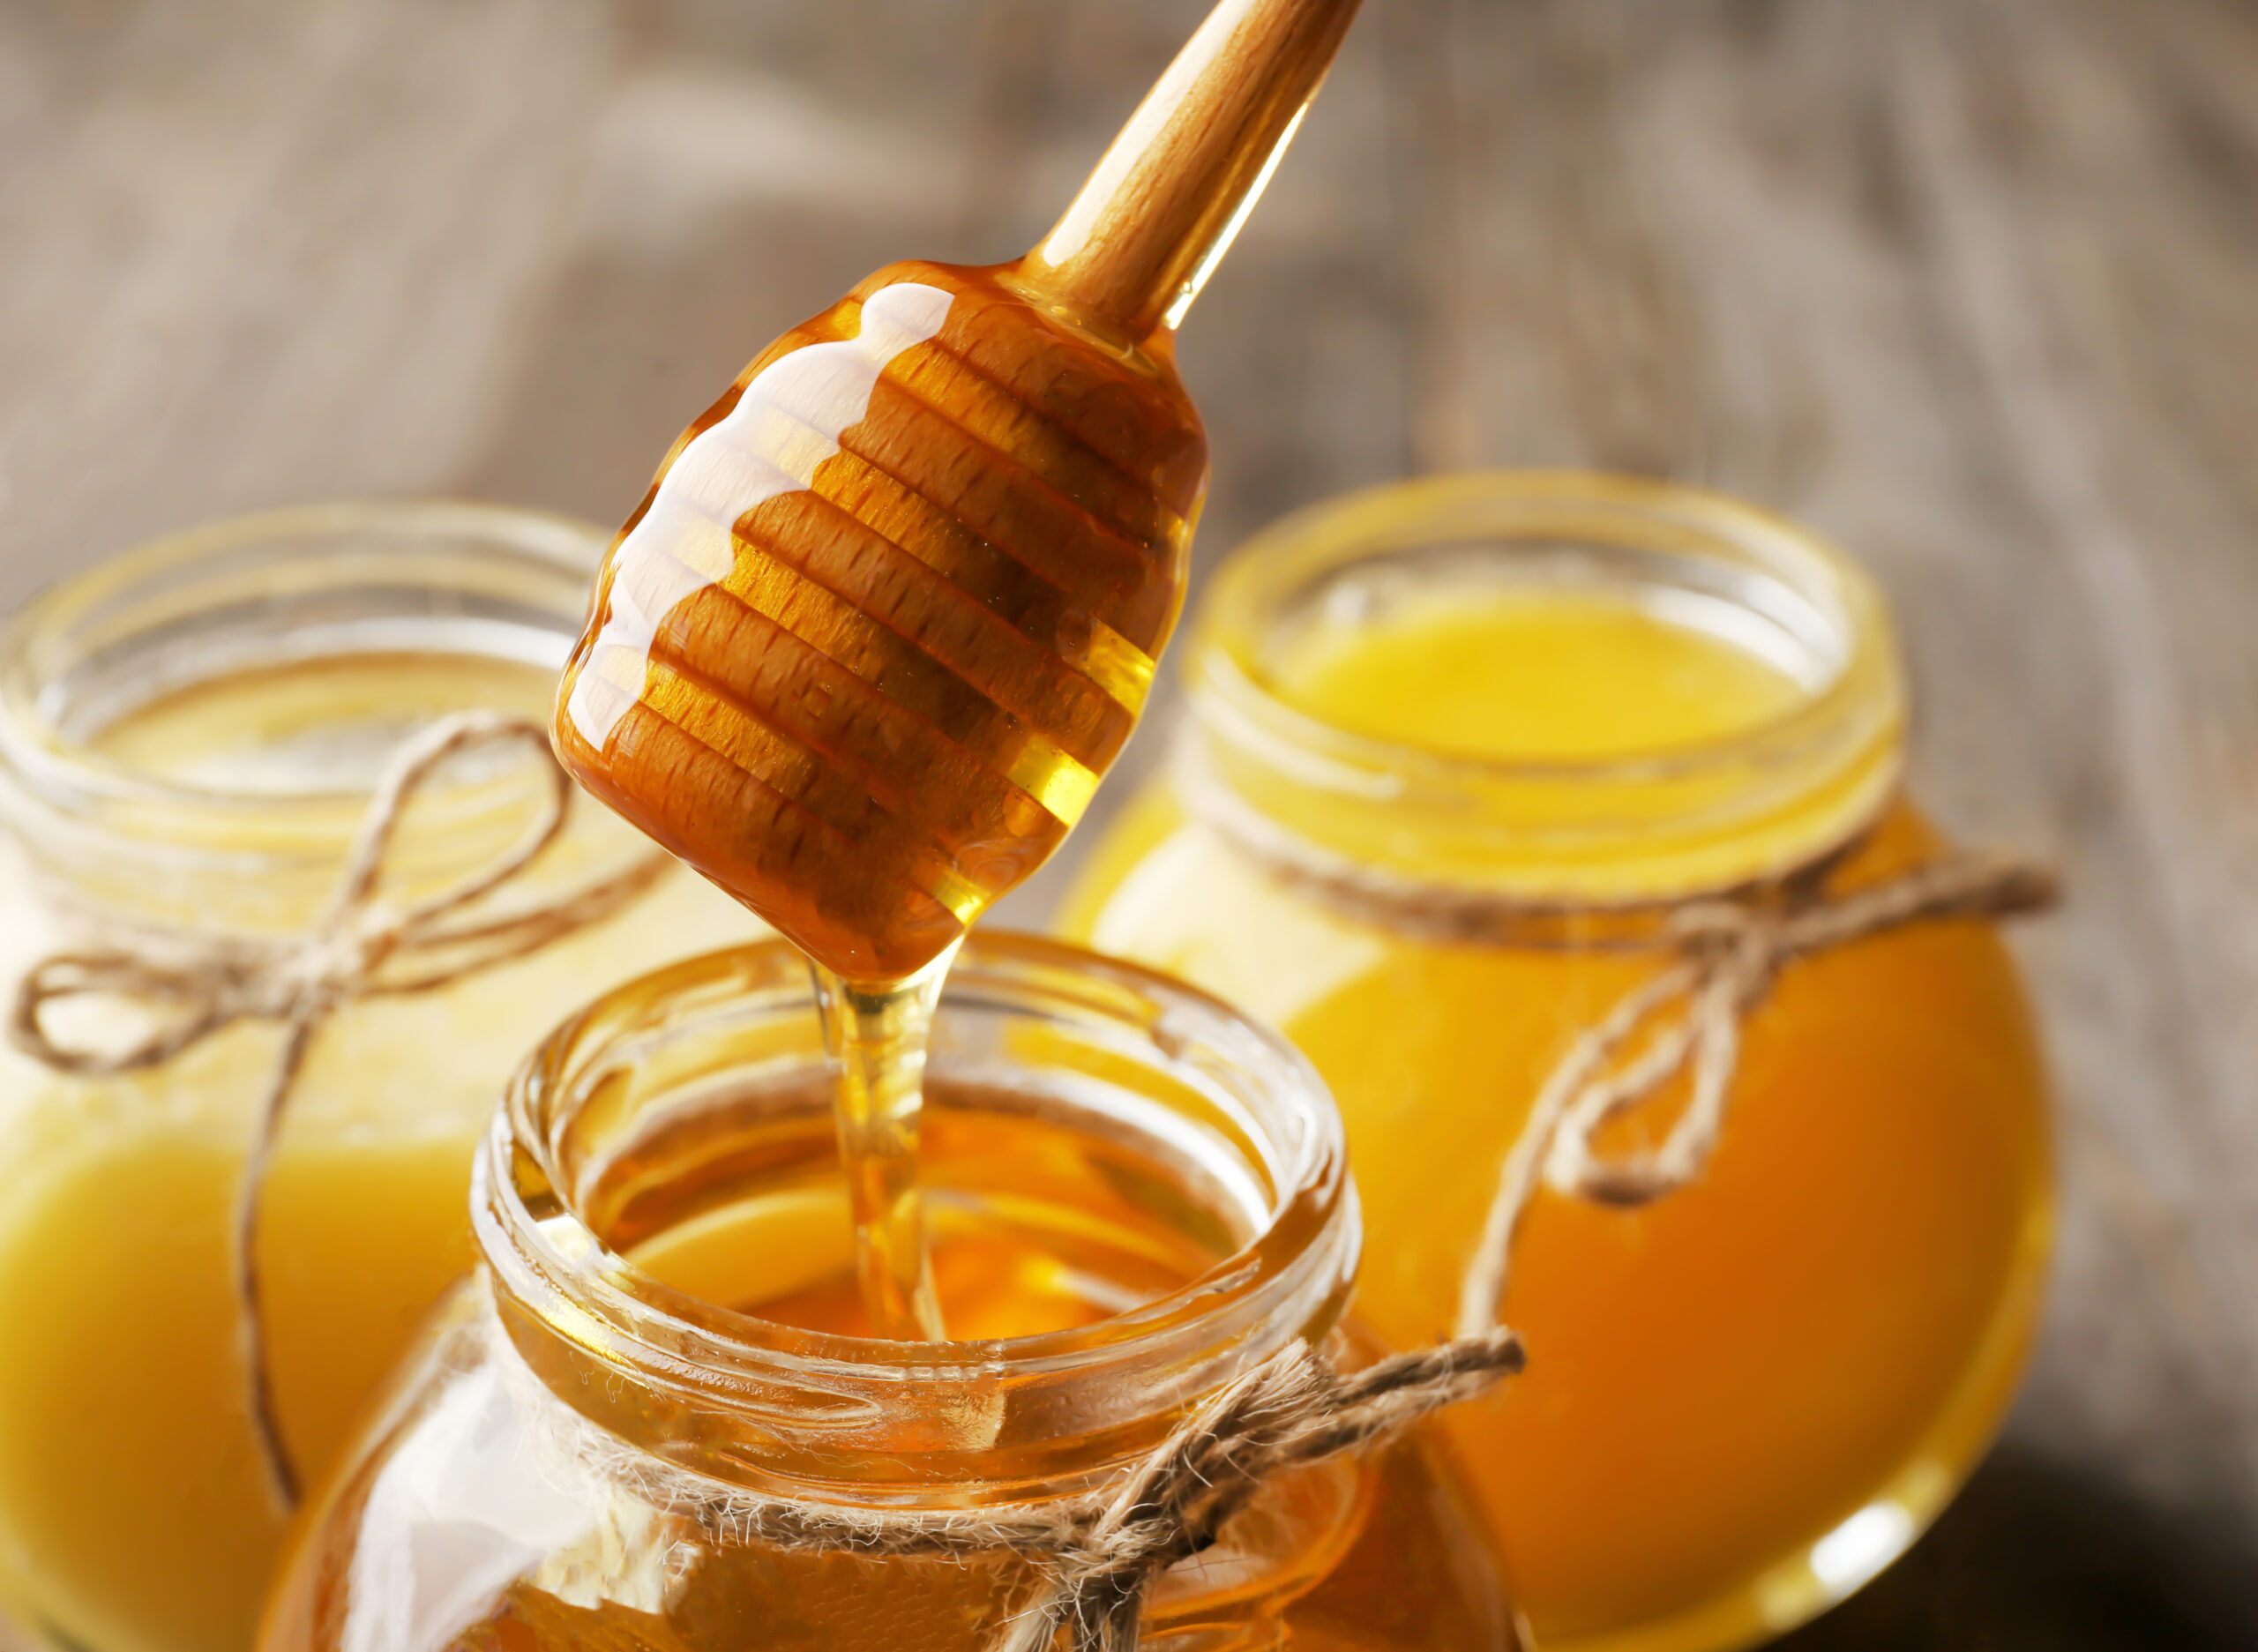 Honey: A Sweet Alternative for Better Cardio-Metabolic Health